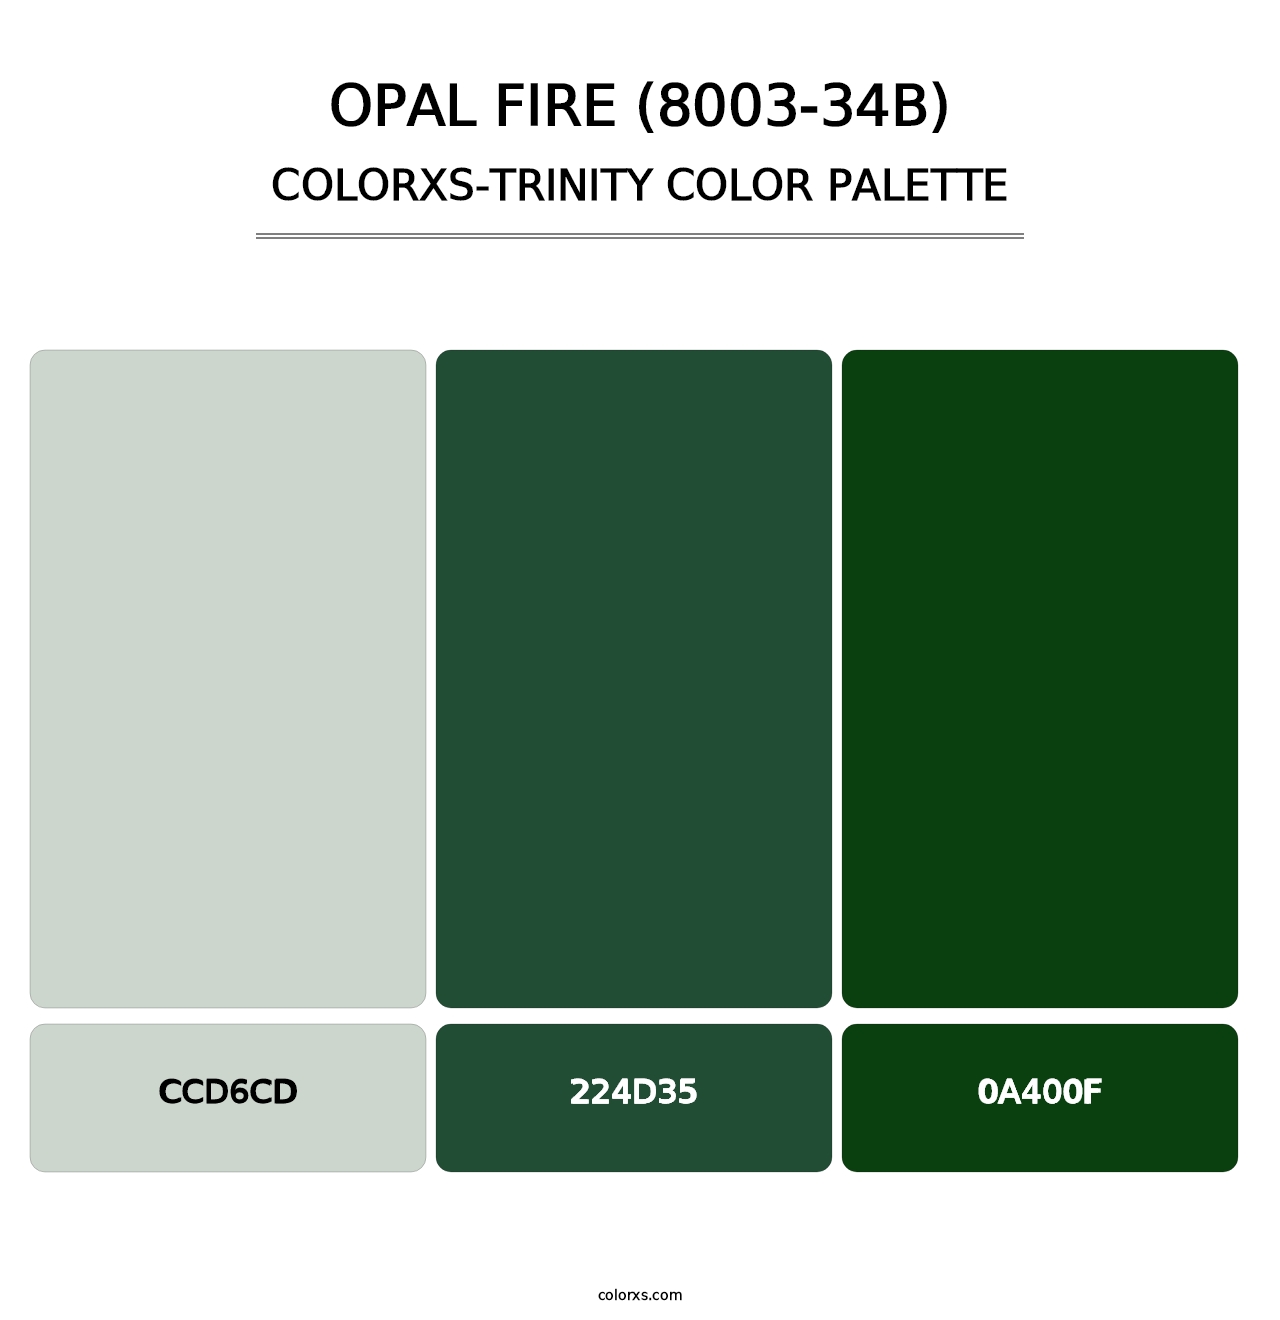 Opal Fire (8003-34B) - Colorxs Trinity Palette